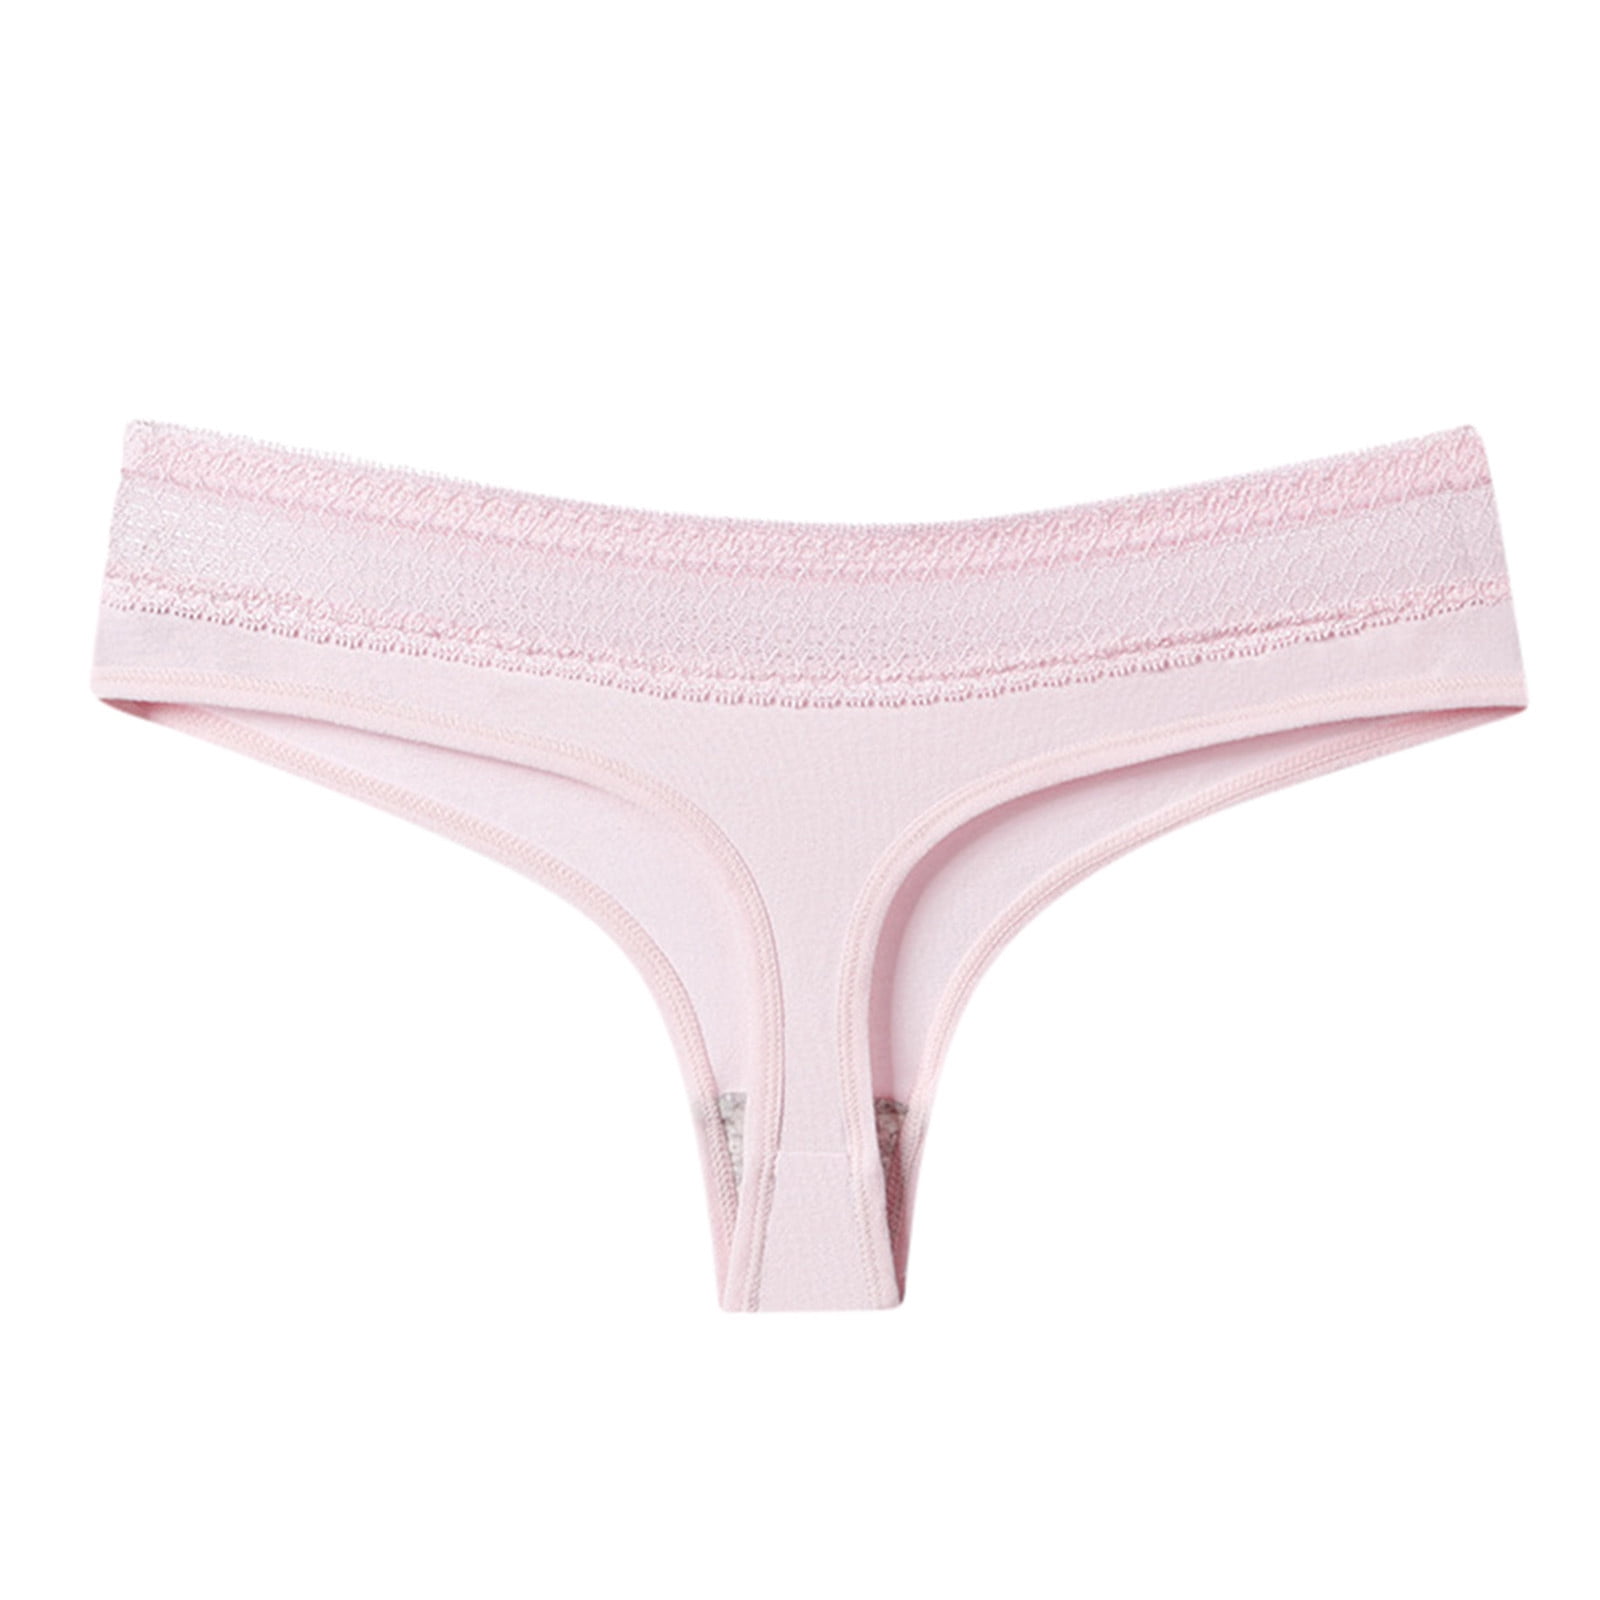 Victoria's Secret Pink Cotton Thong Panty/Underwear Multicolor New